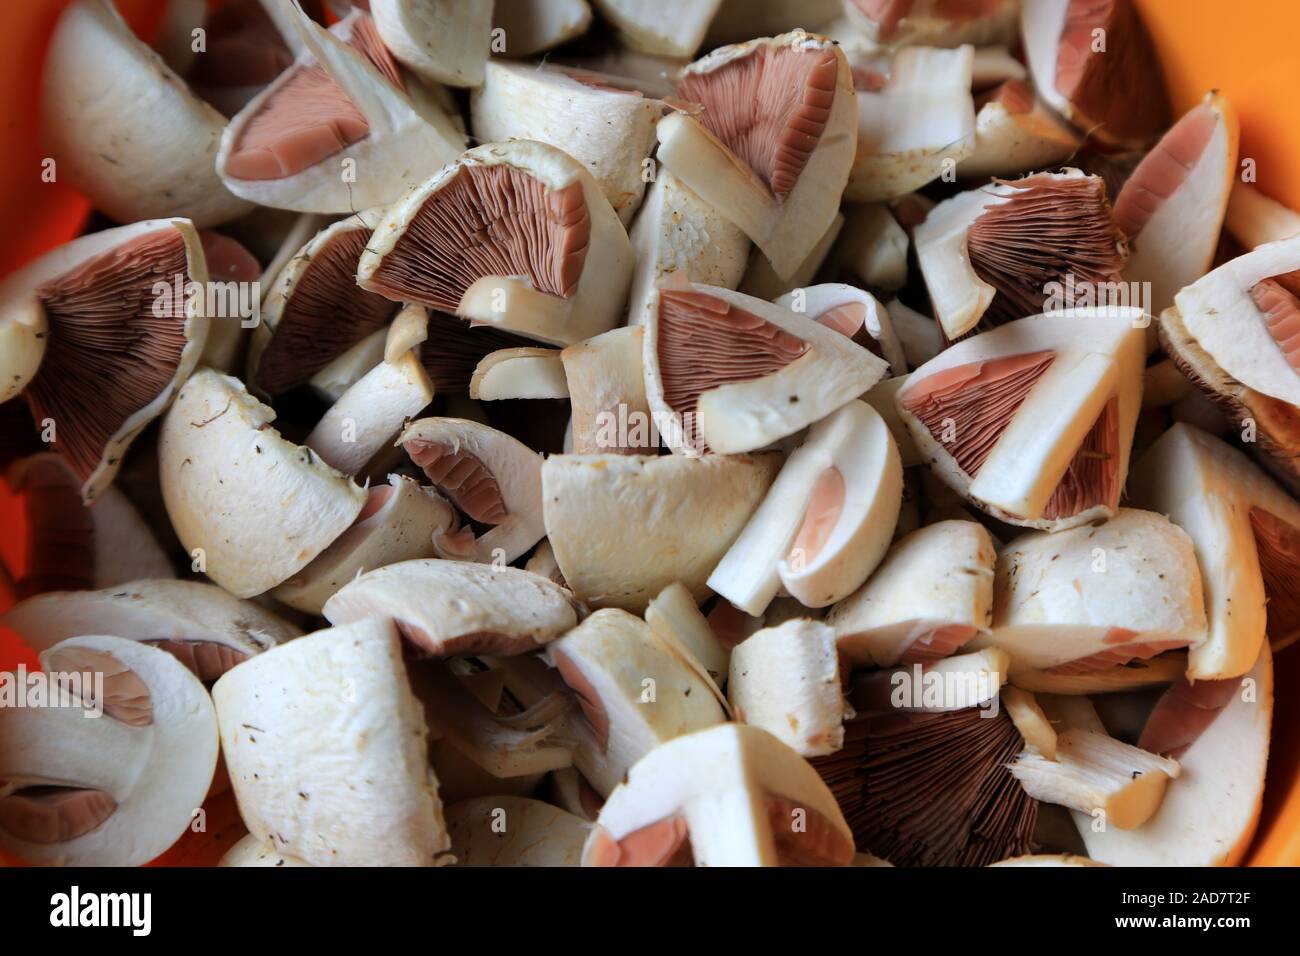 Mushroom dish of meadow mushroom, Field mushroom, Agaricus campestris, Mushroom of the year 2018 Stock Photo